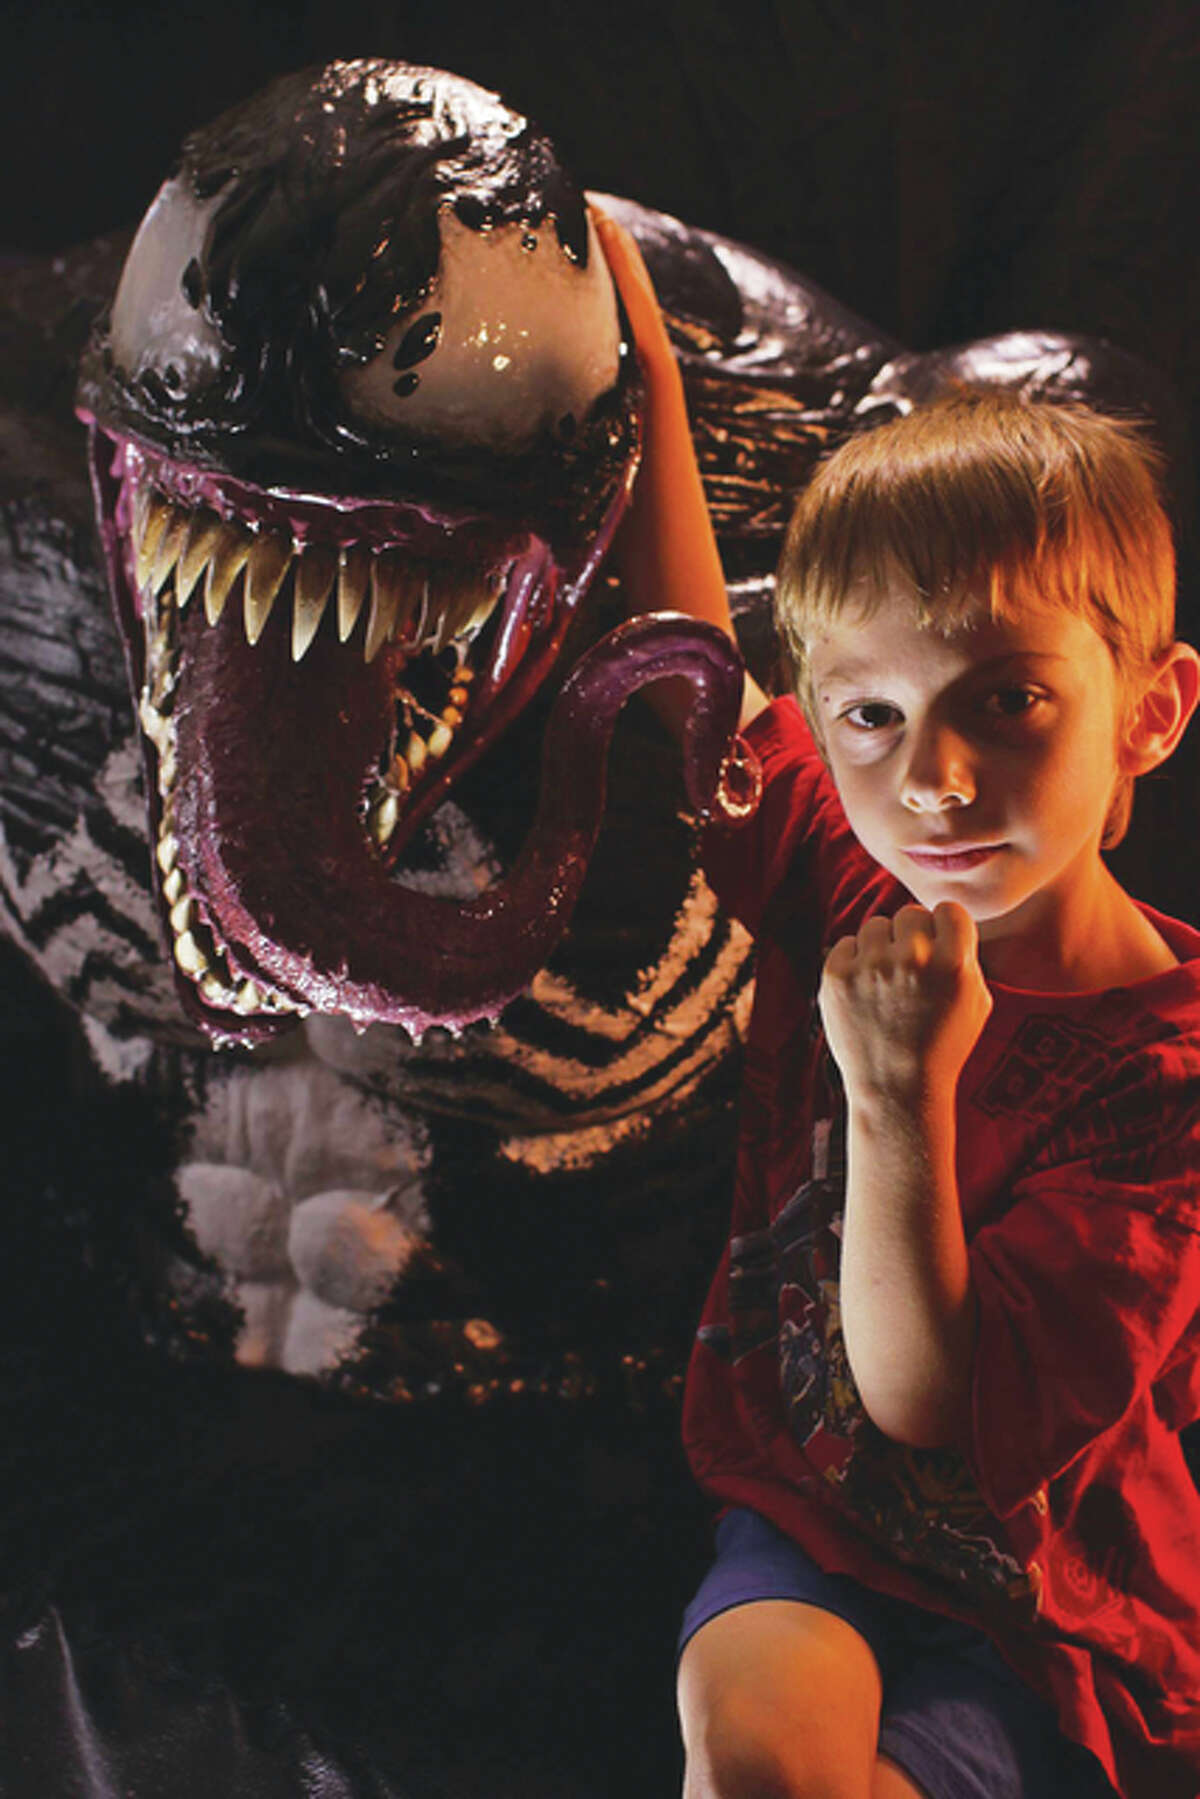 A life size sculpture of the super villain Venom with a human child for size comparison.